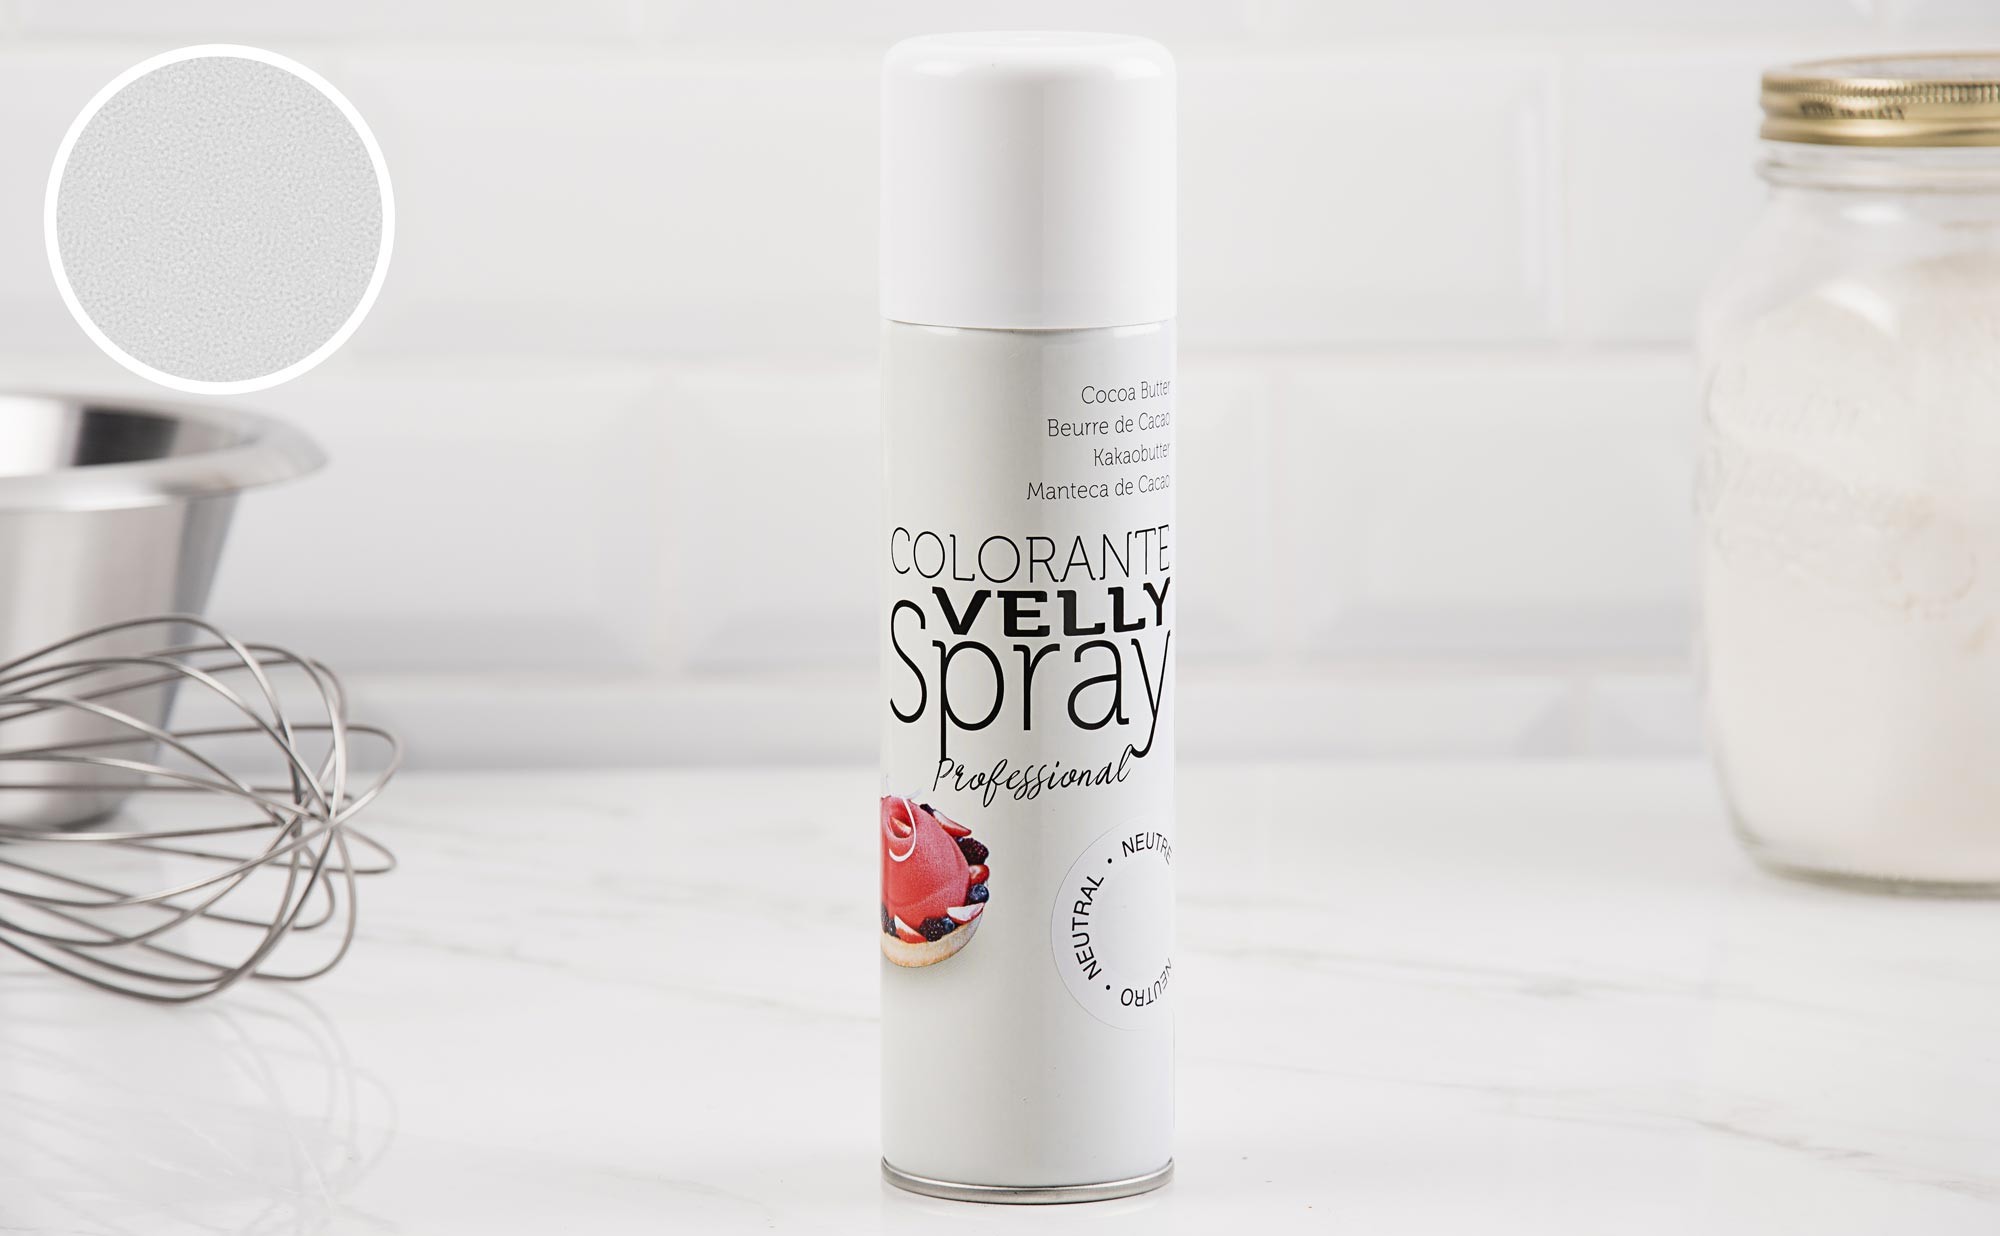 Velvet Spray 400 ml - BLANC